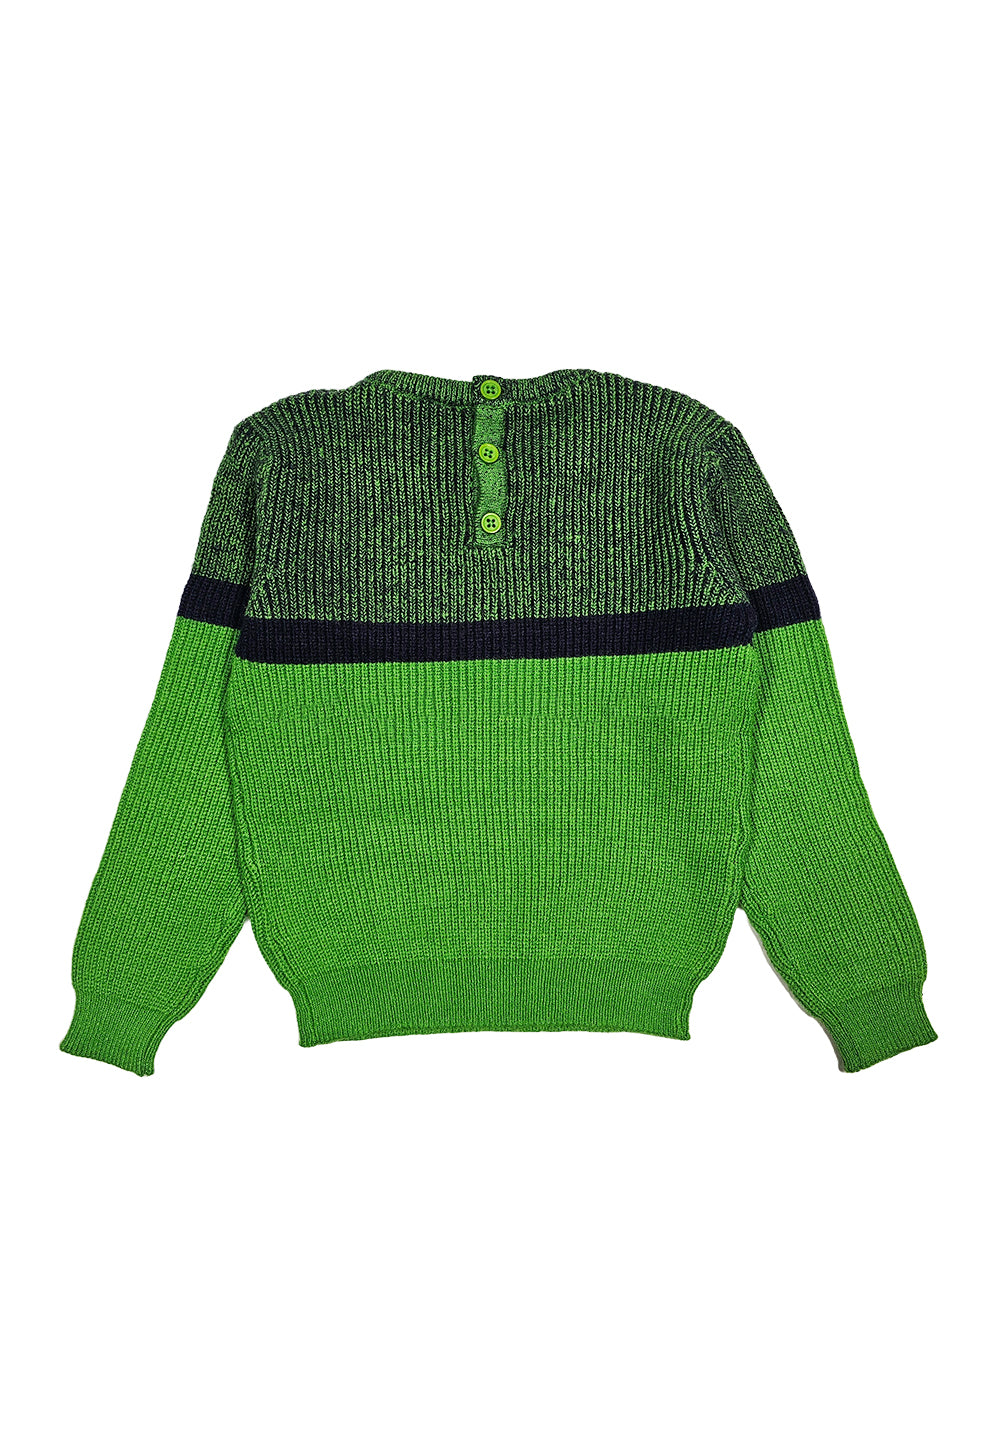 Green sweater for newborn